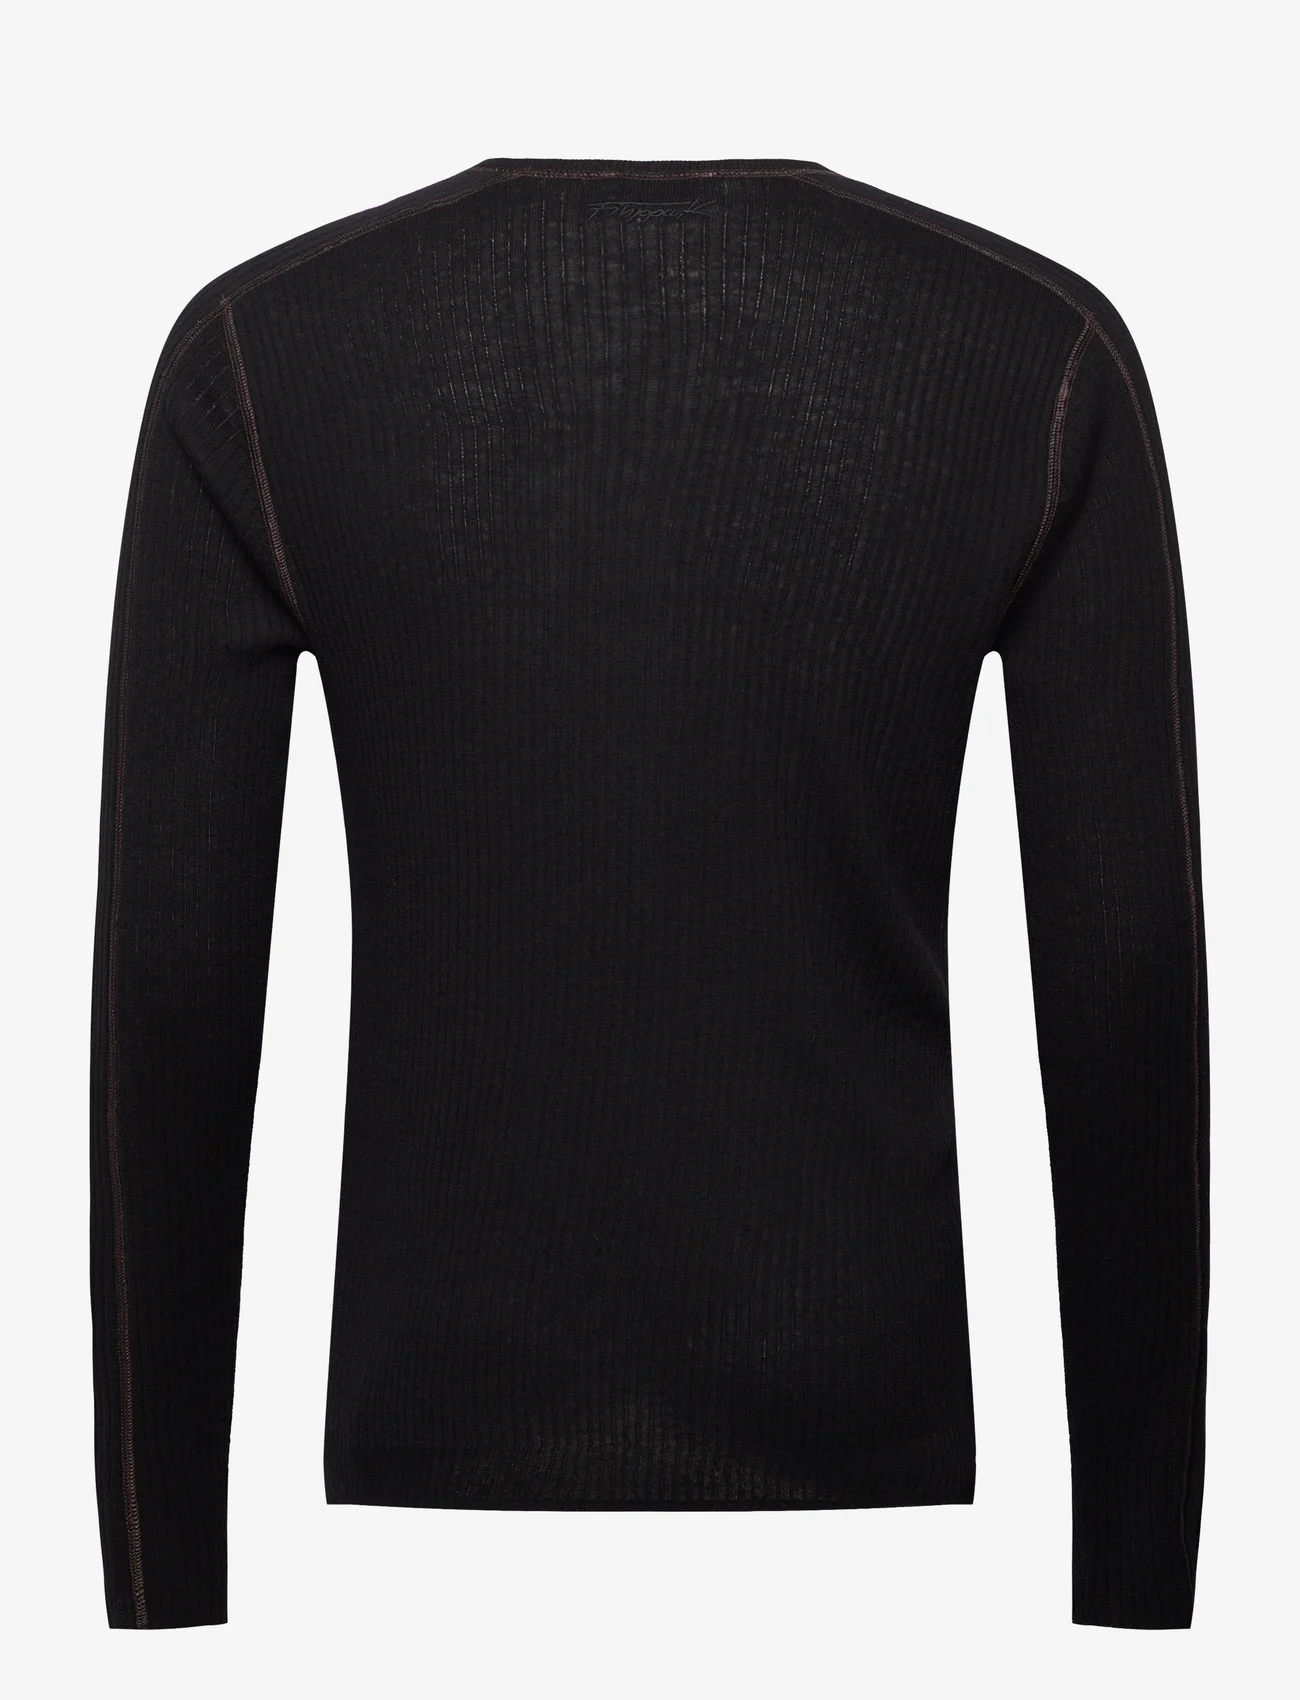 Filippa K - Light Rib Sweater - truien en hoodies - black/brow - 1